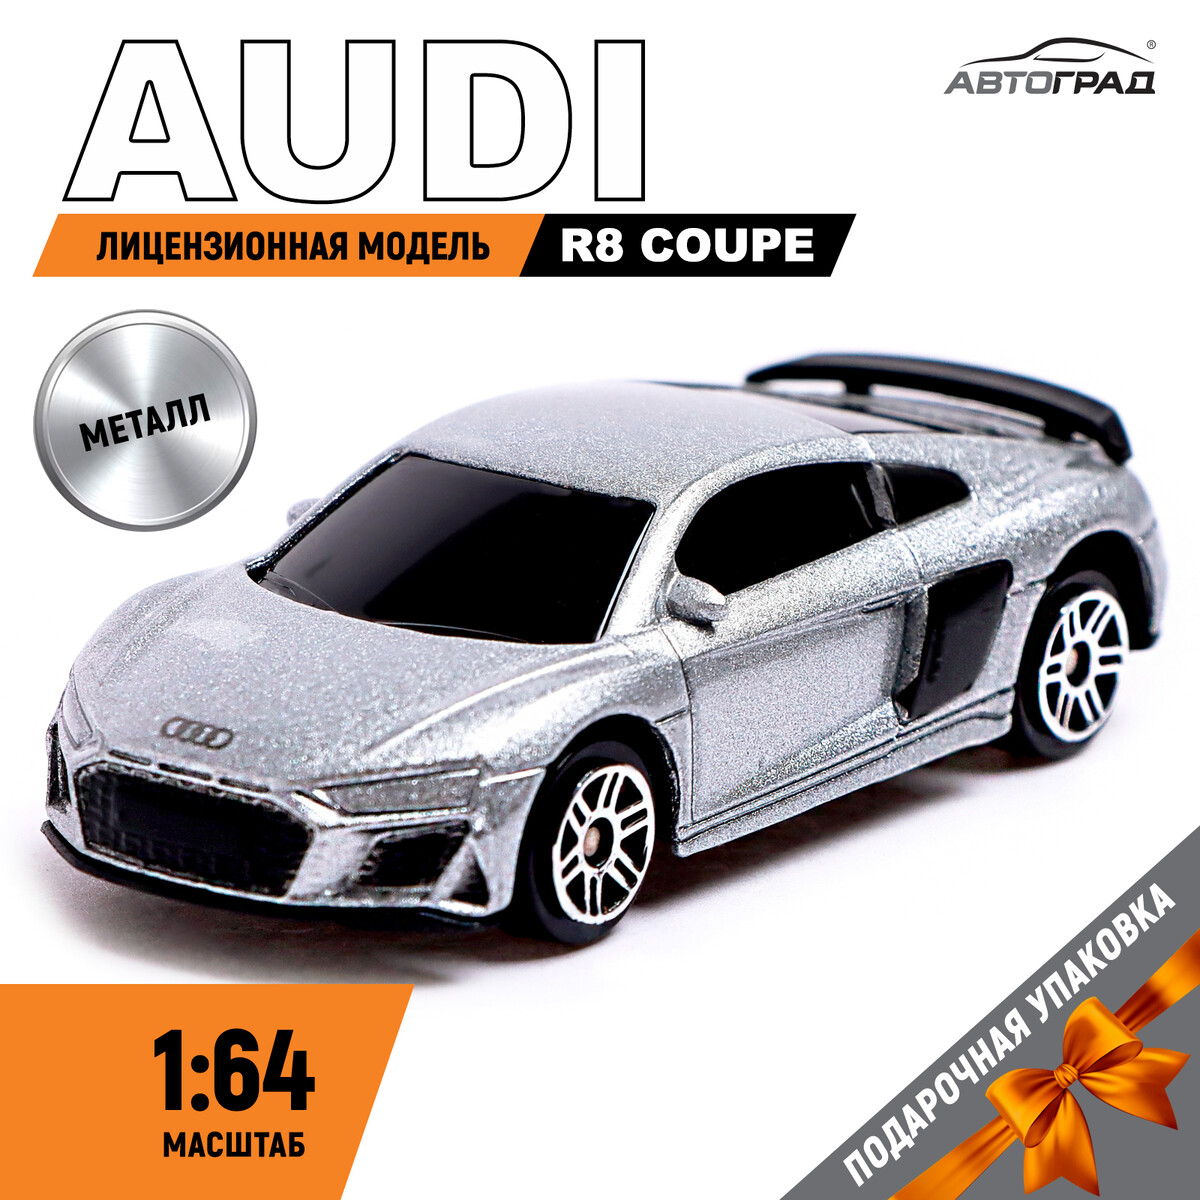 Машина металлическая audi r8 coupe, 1:64, цвет серебро машина металлическая автоград volkswagen golf gti 1 43 серебро 7152977